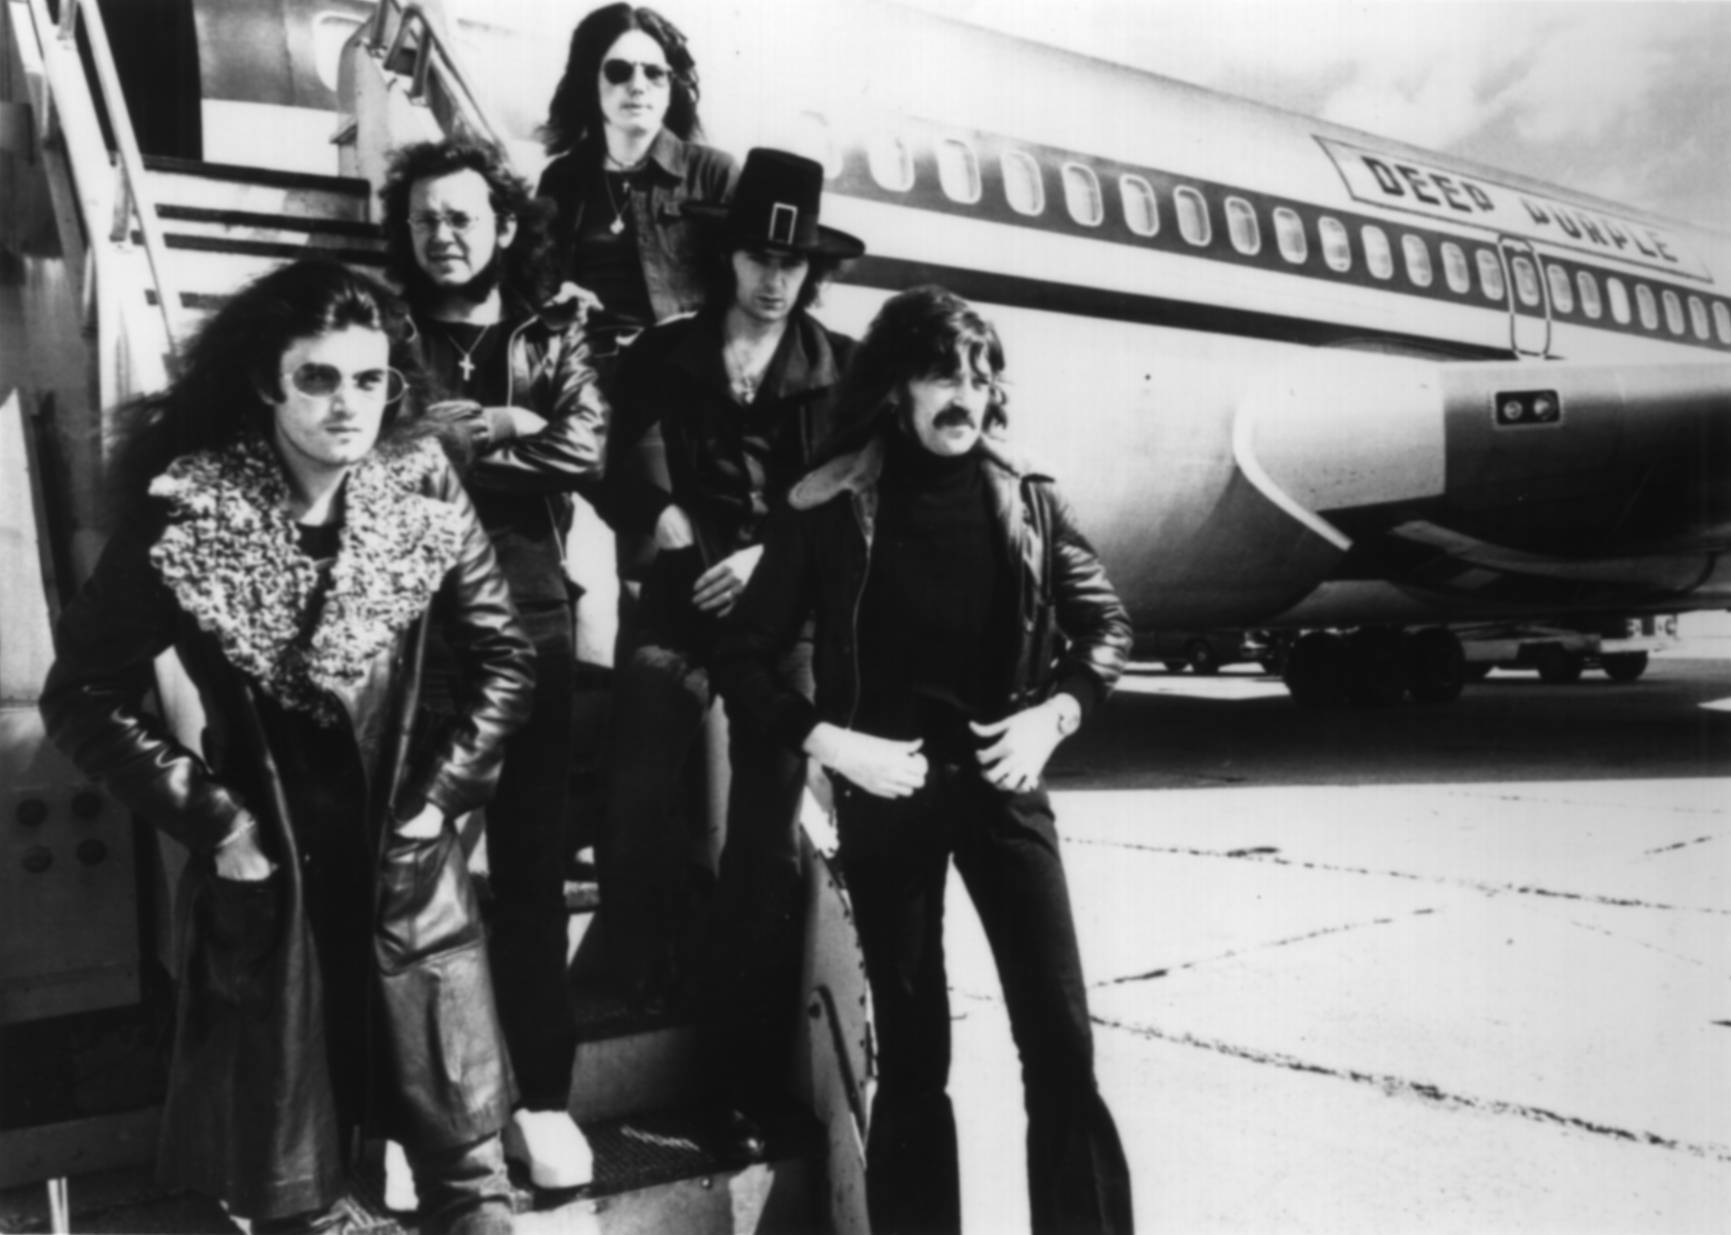 Klassiskrockmusiklegend Deep Purple 1974 Fotografi. Wallpaper